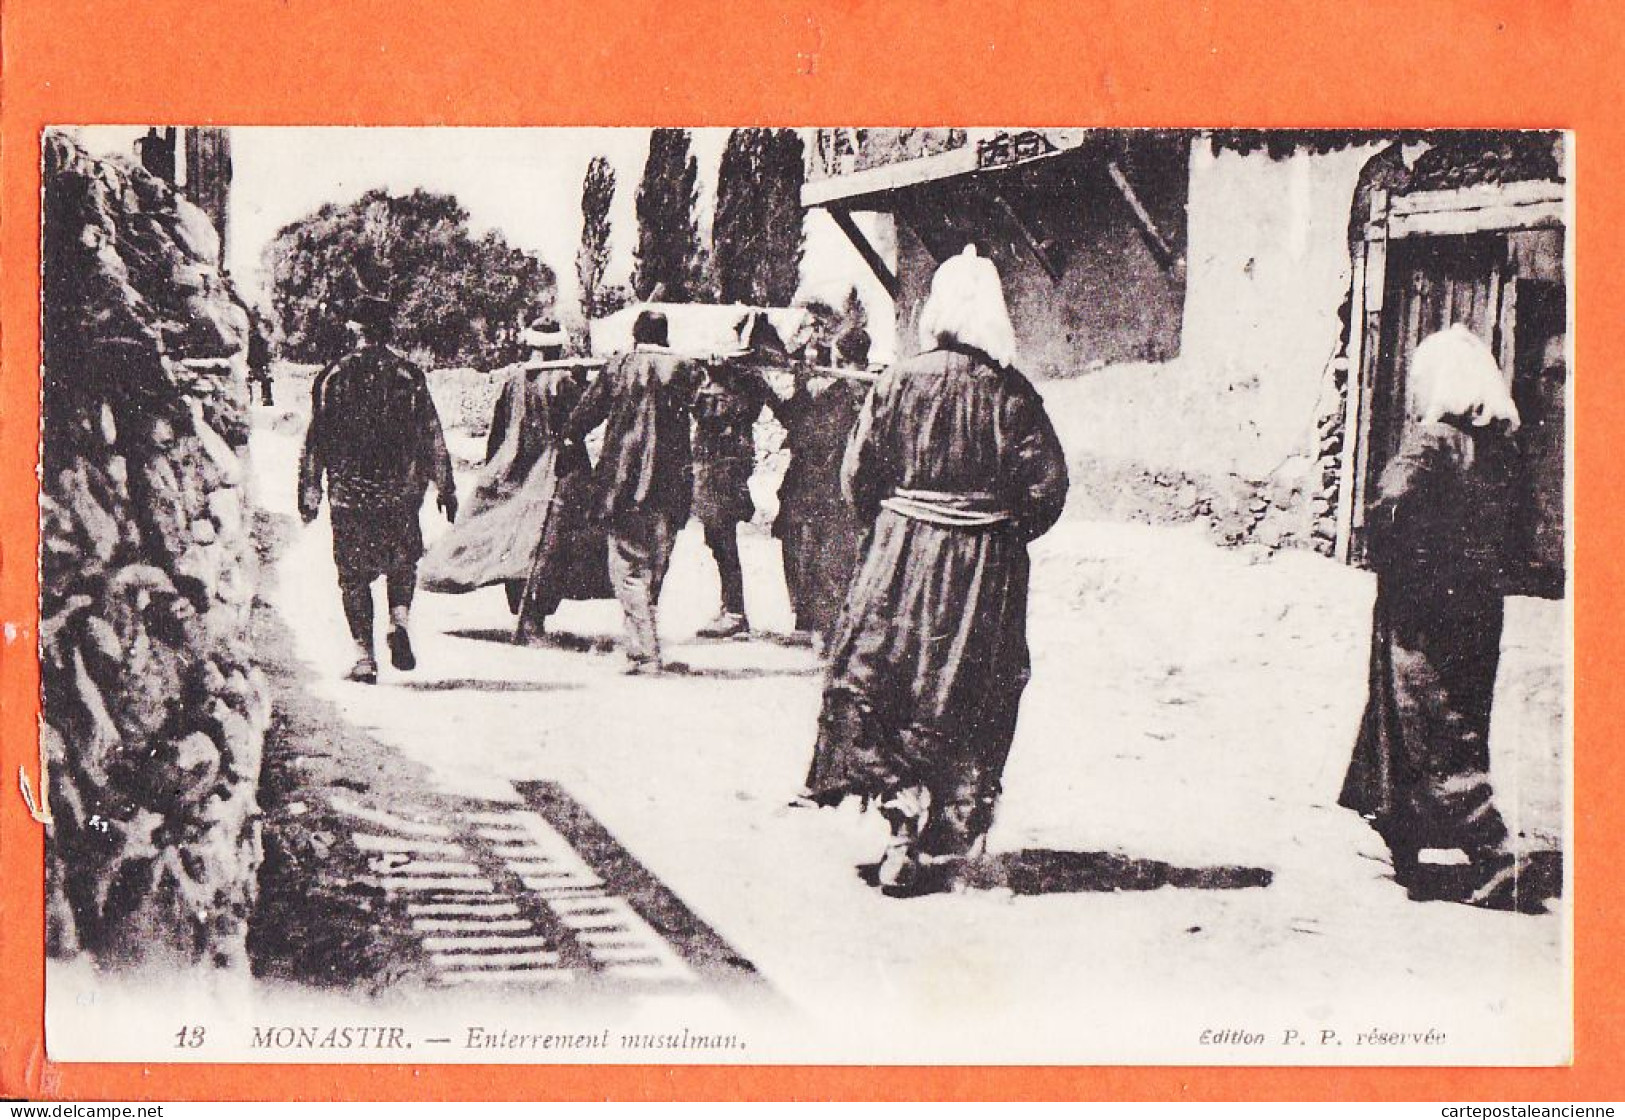 06477 / MONASTIR Macédoine Bitola Битола Μοναστήρι Enterrement Musulman 1915s Edition LEVY P.P 13 - North Macedonia